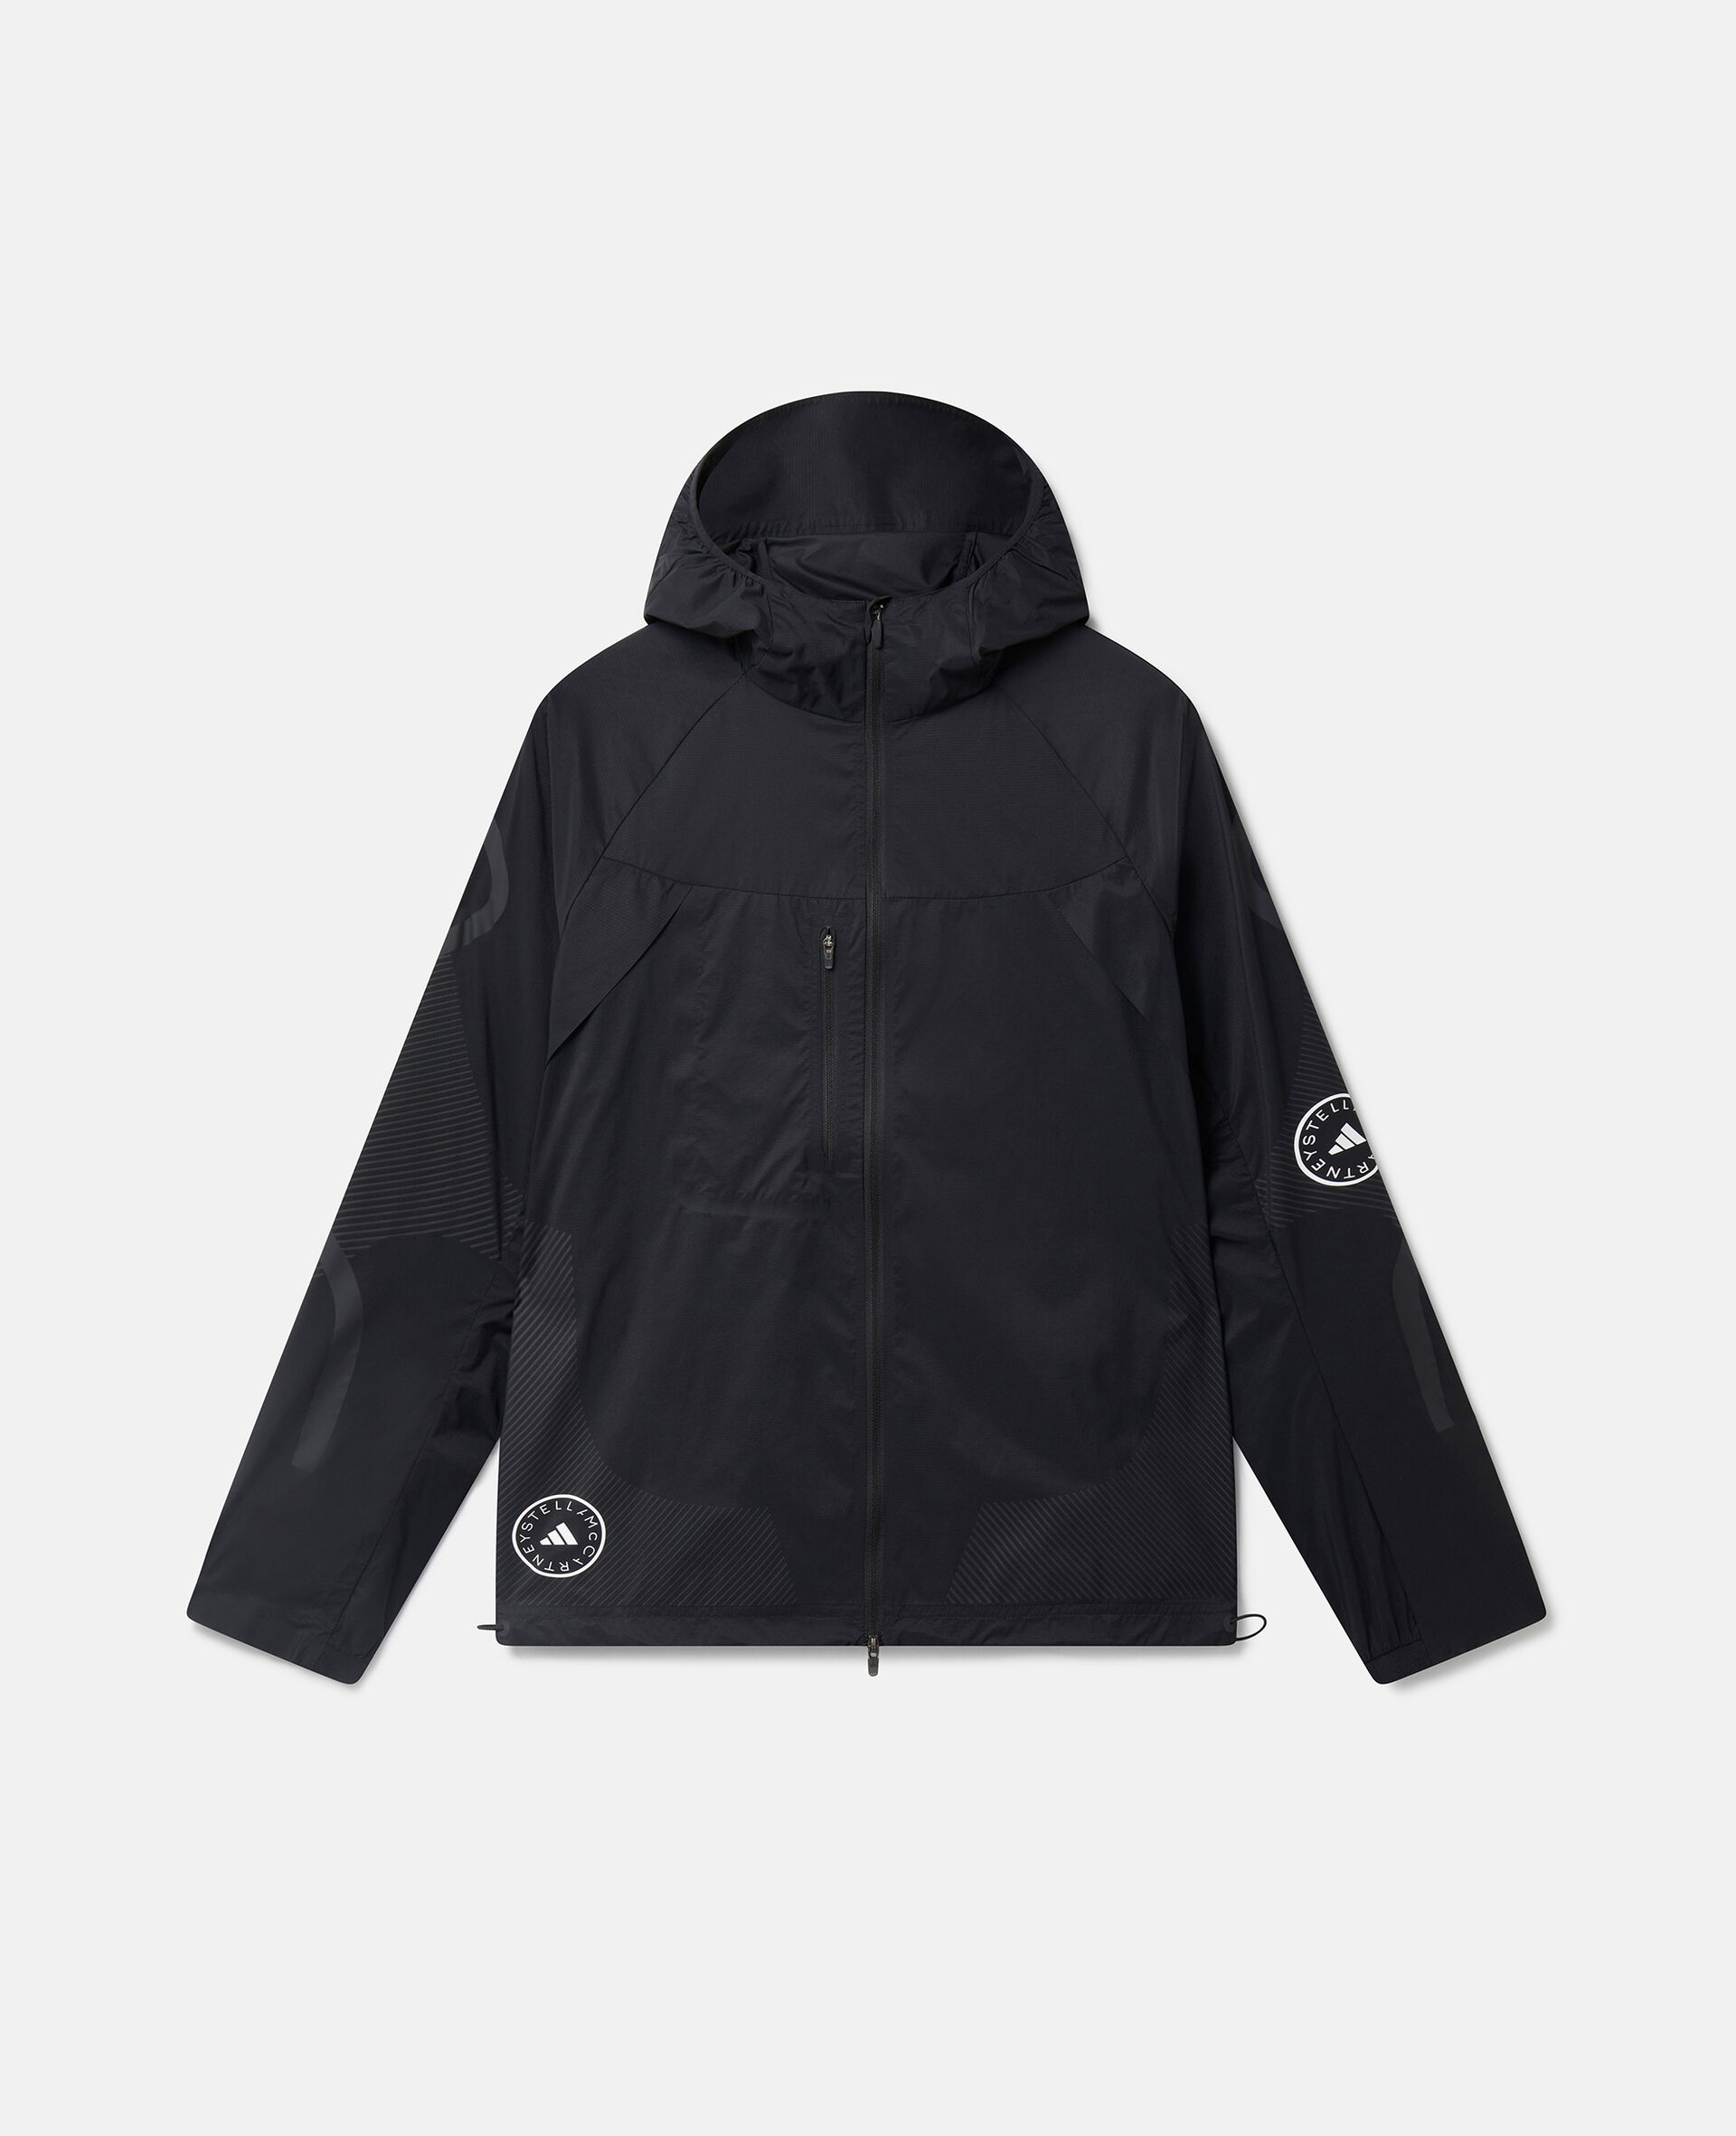 TruePace Hooded Running Jacket-Black-large image number 0